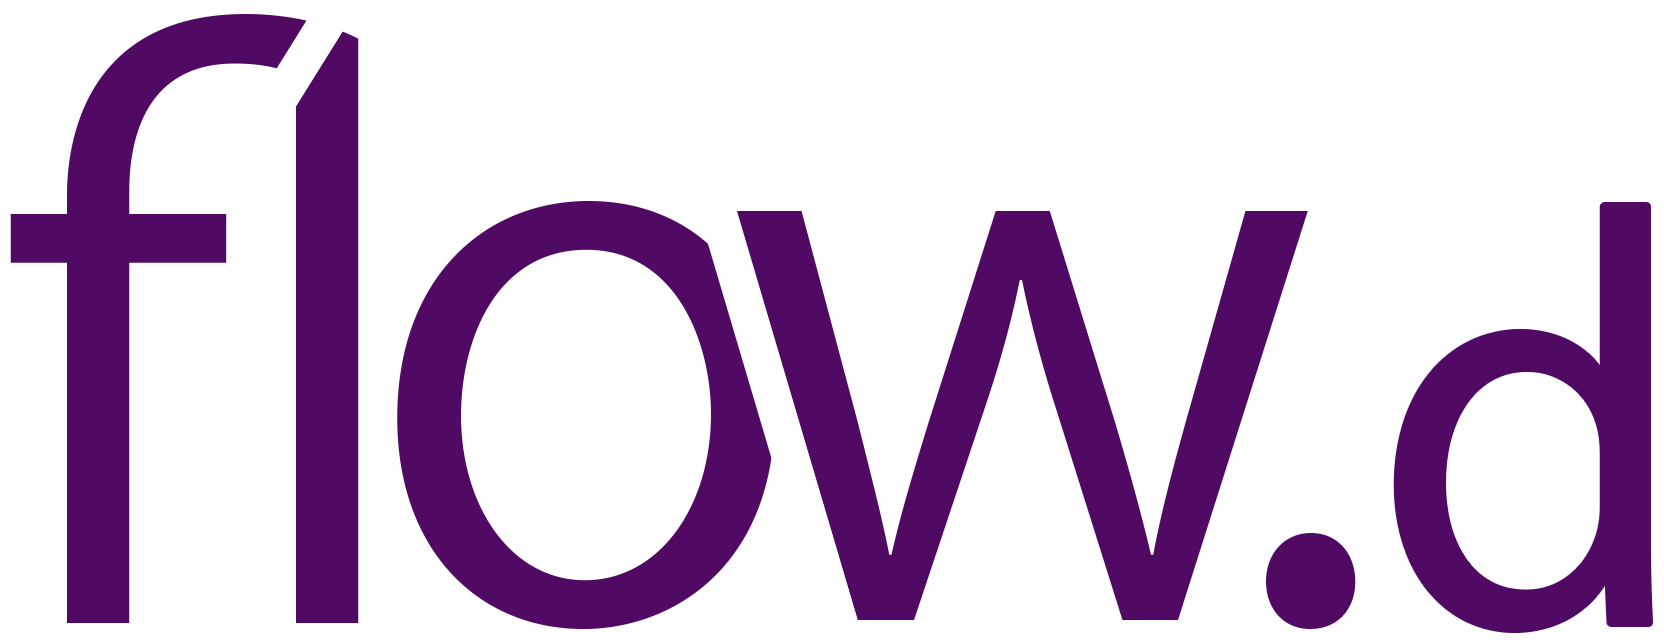 flowd logo